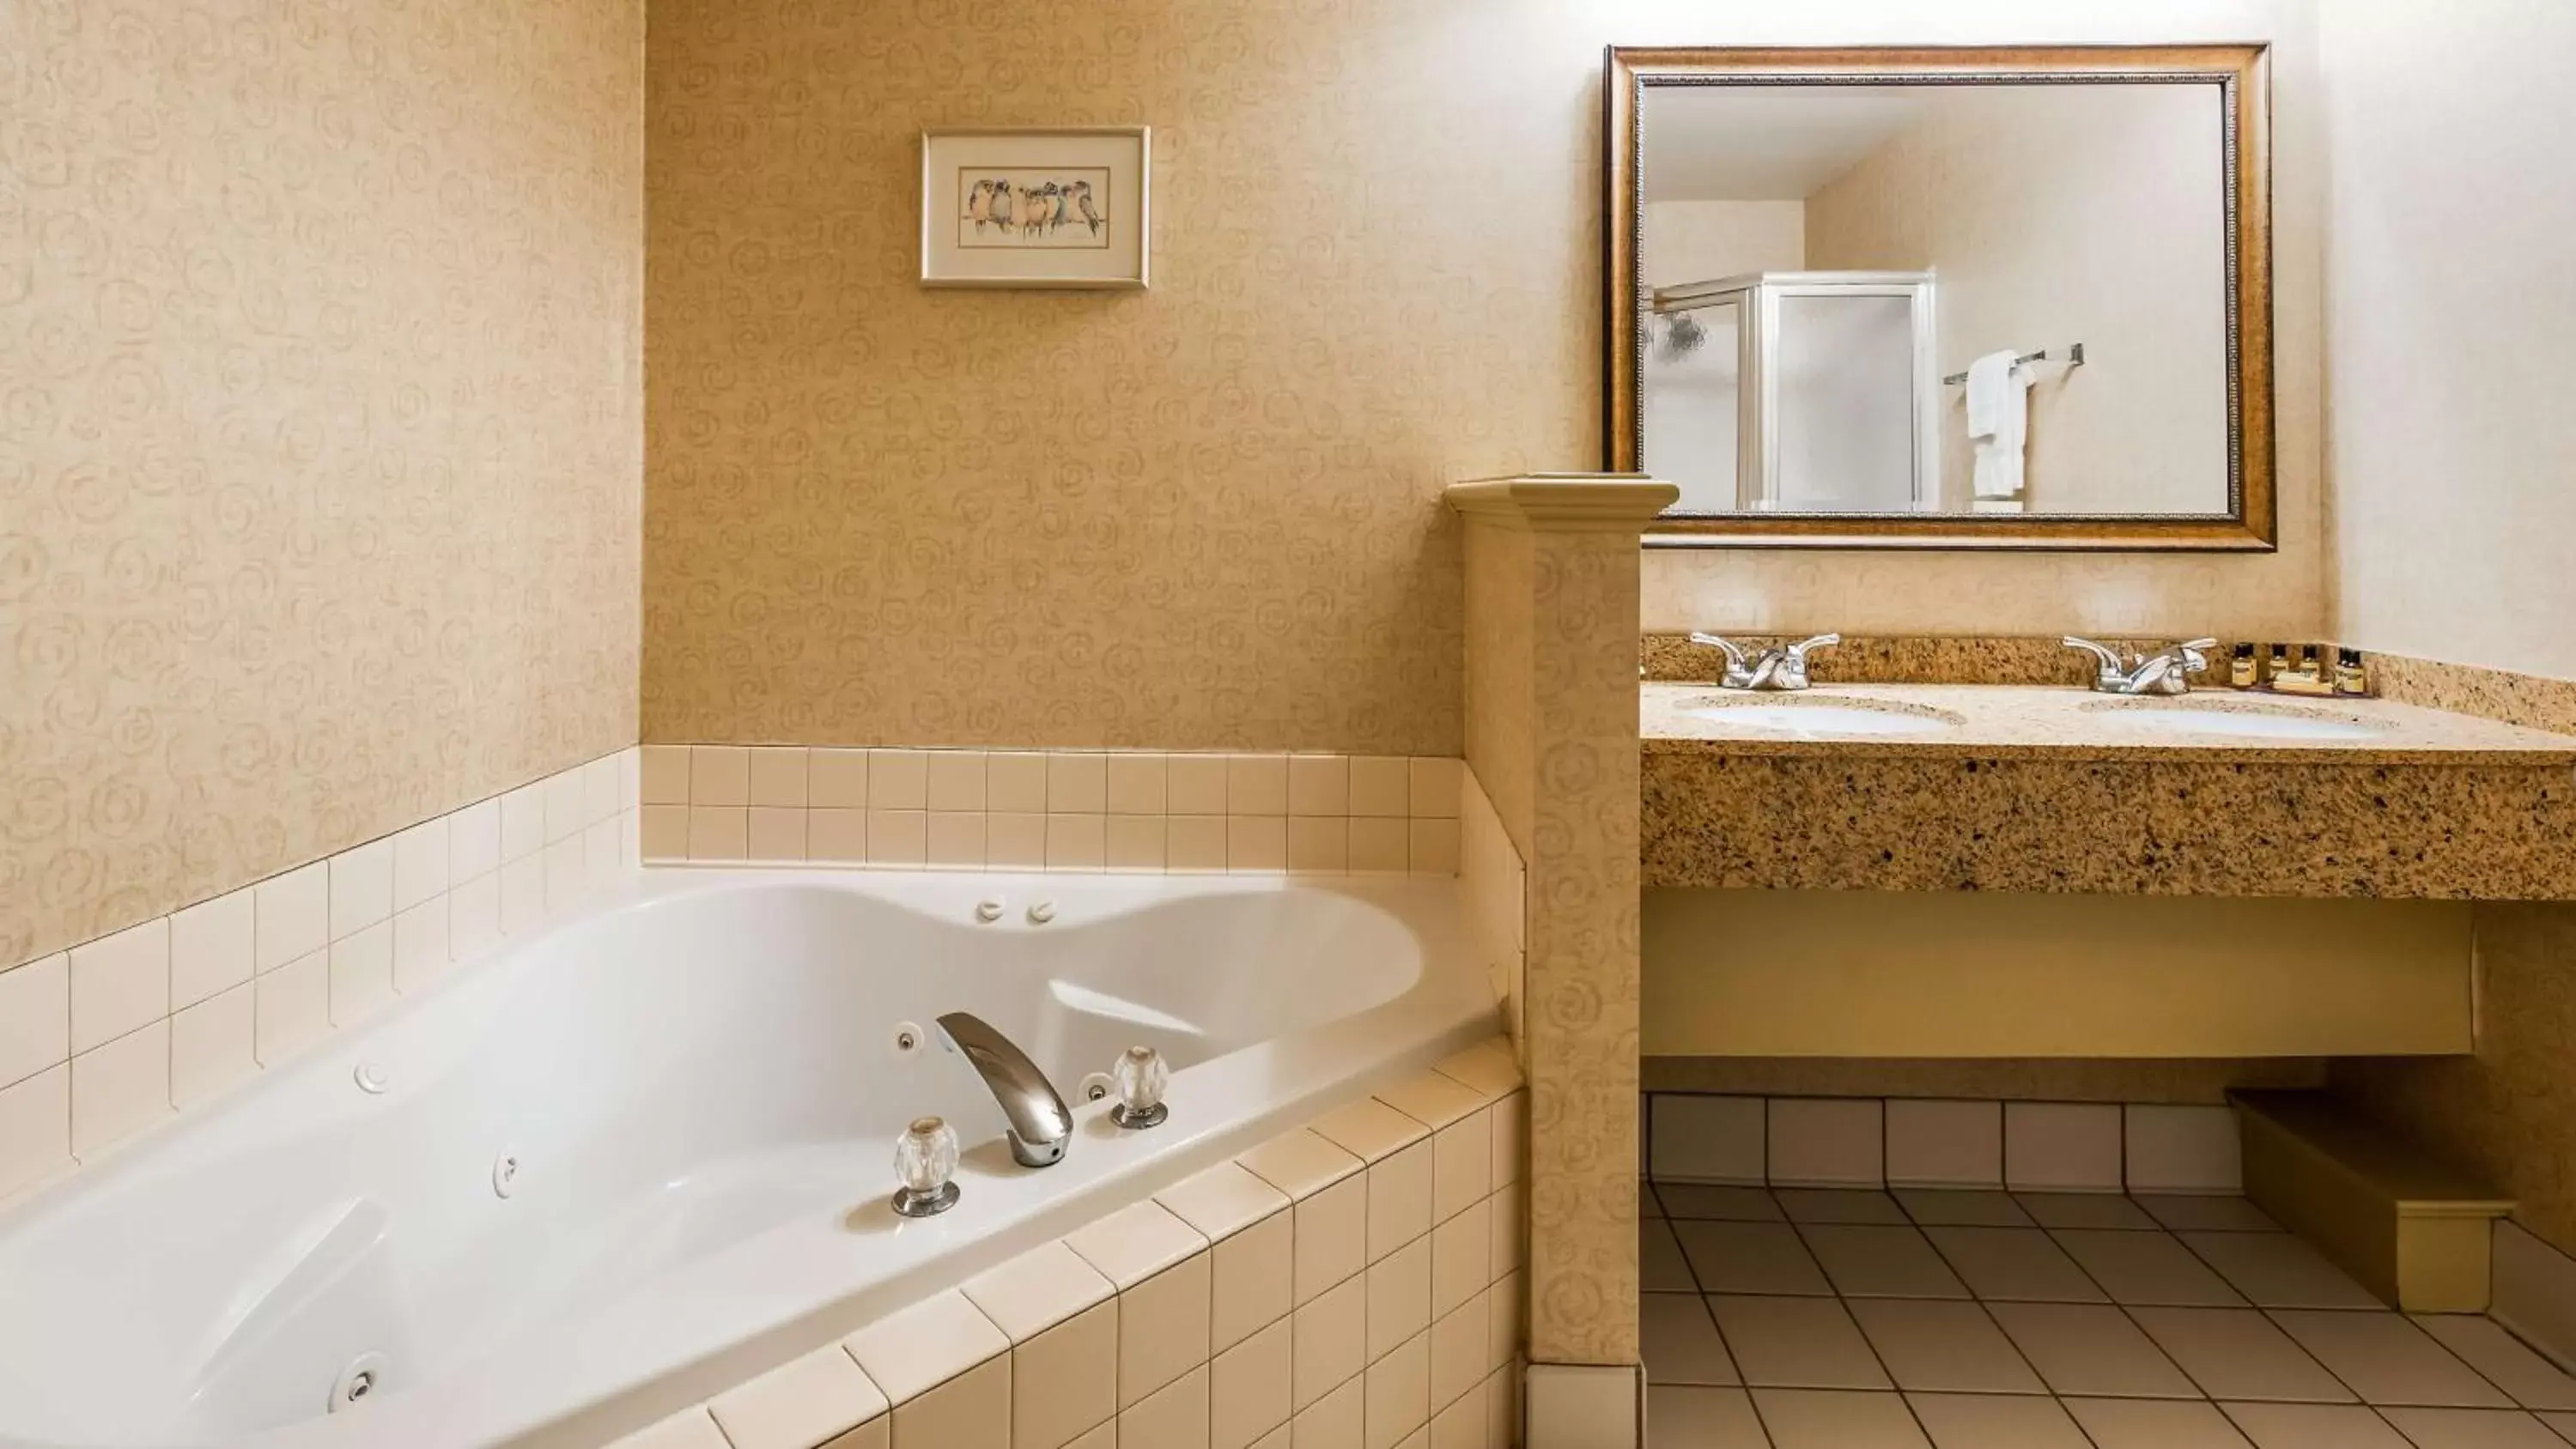 Photo of the whole room, Bathroom in Best Western PLUS Revere Inn & Suites